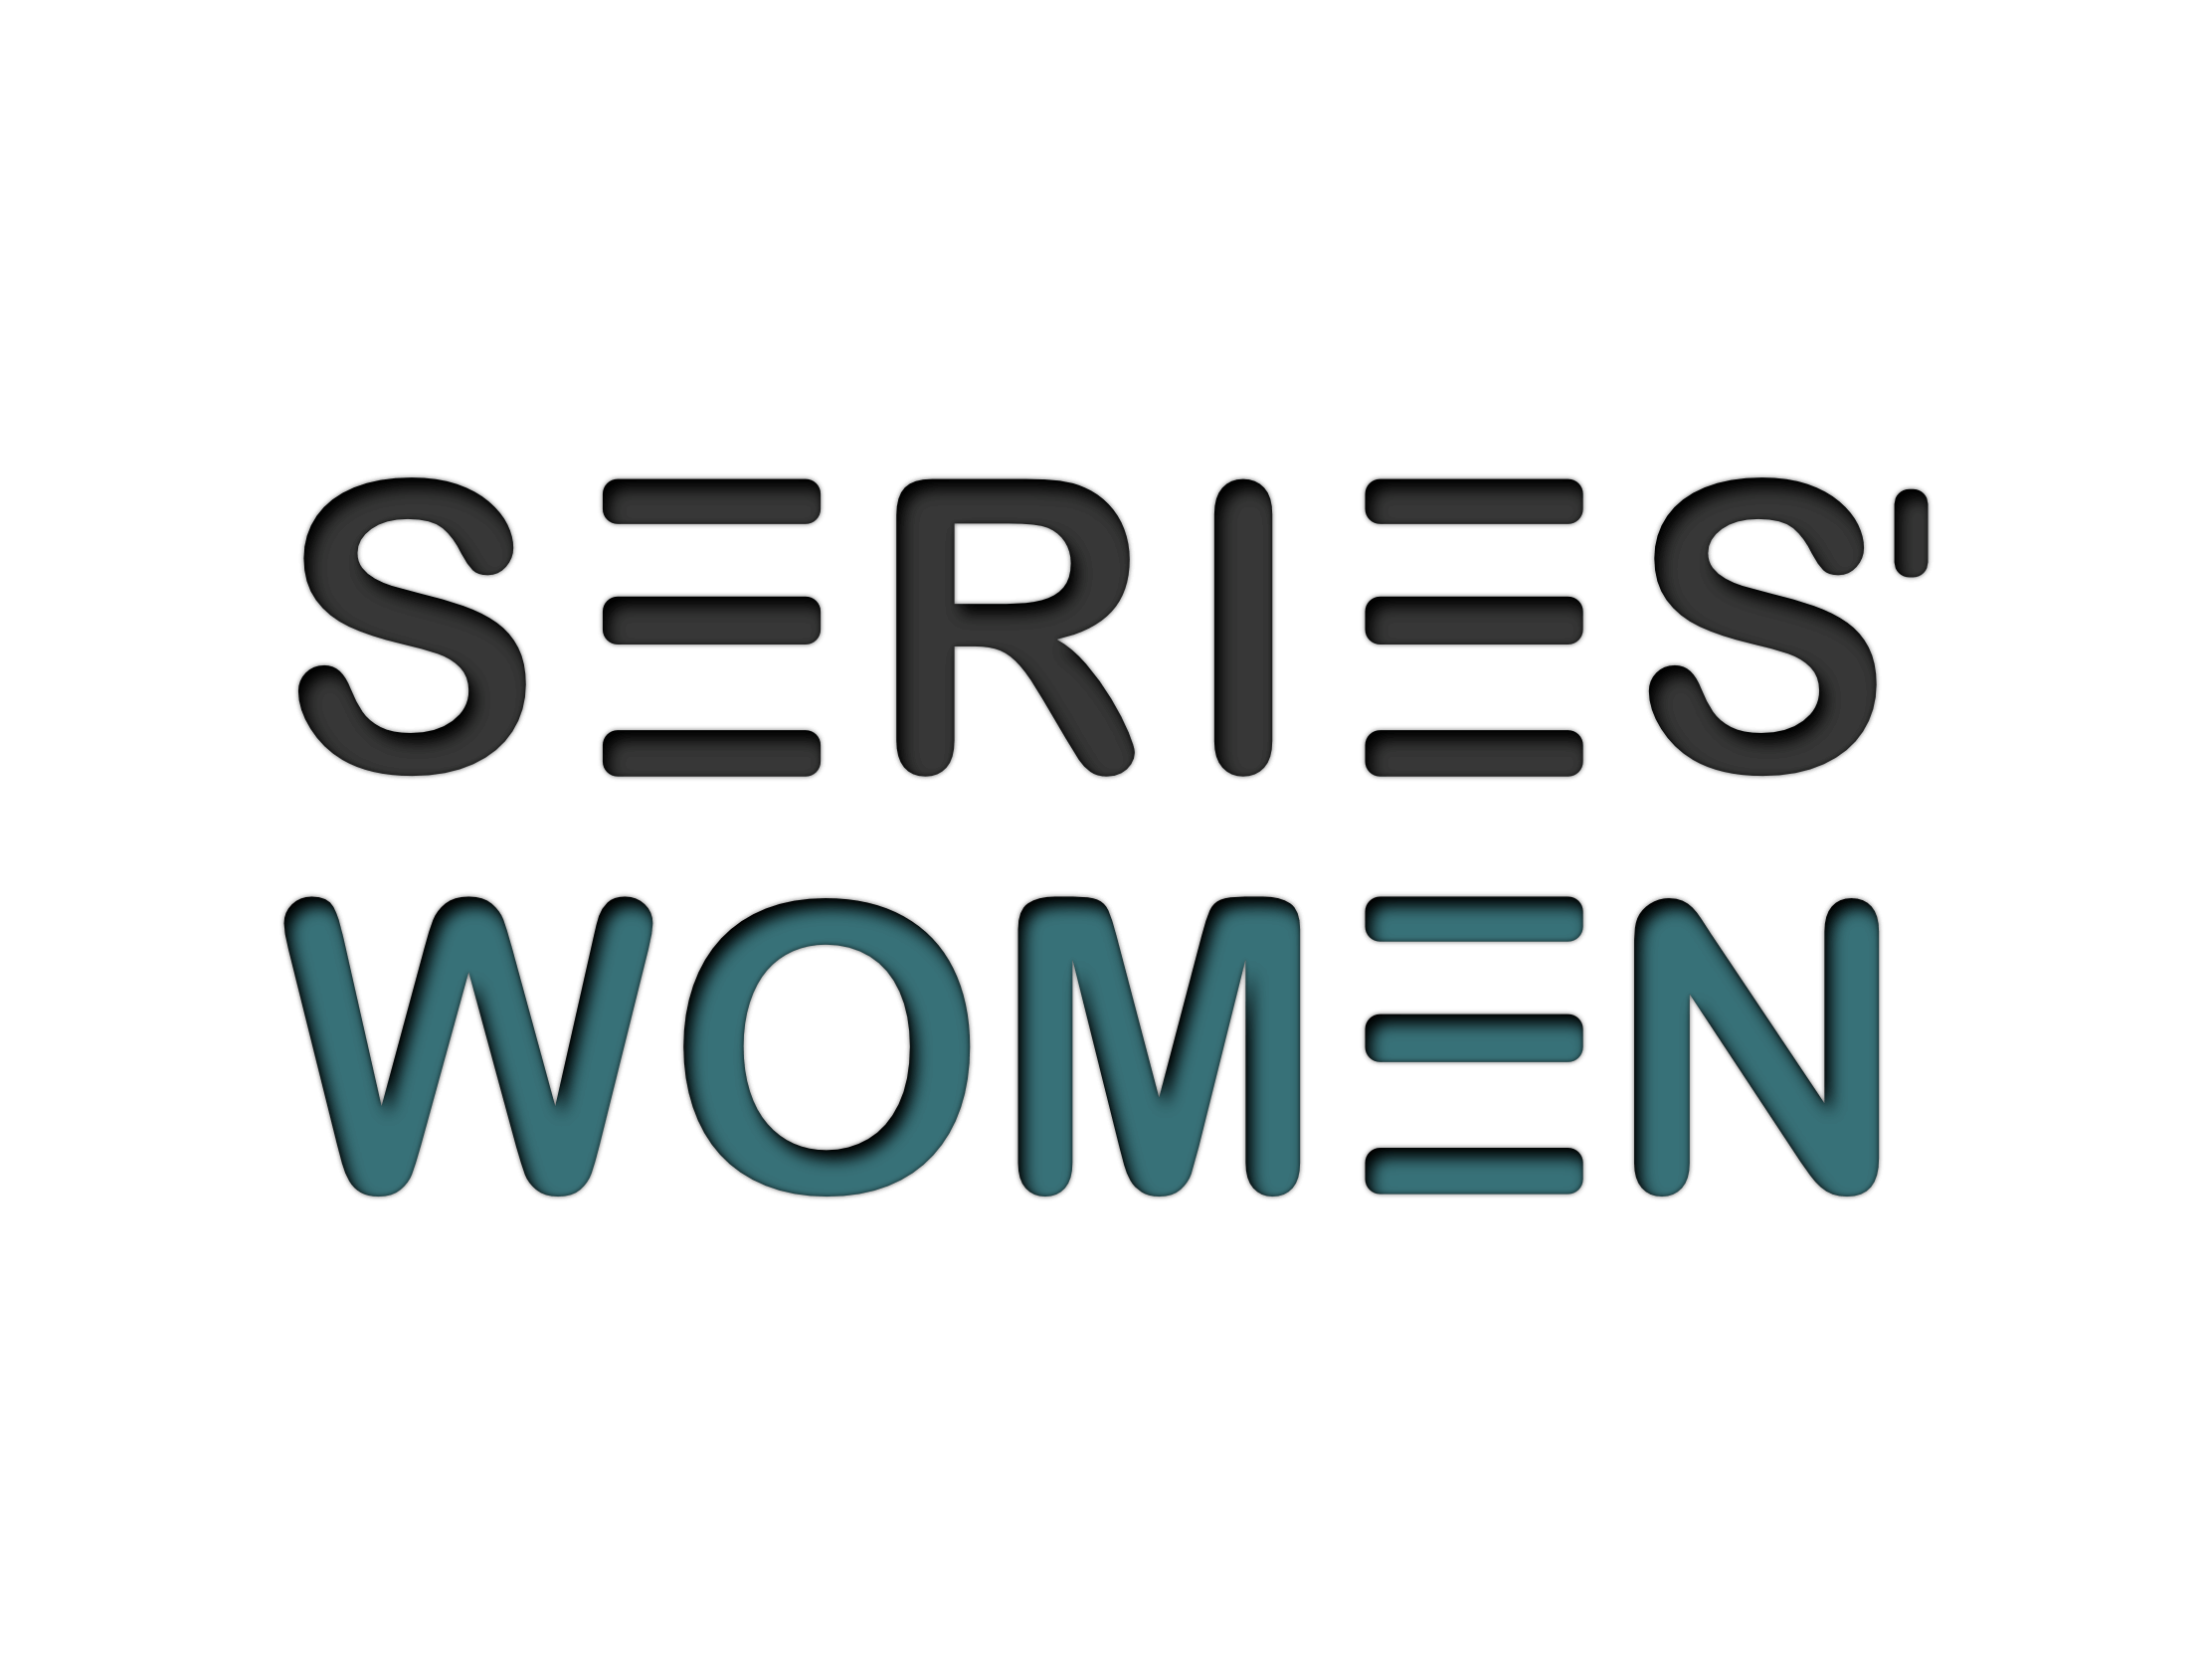 Series' Women